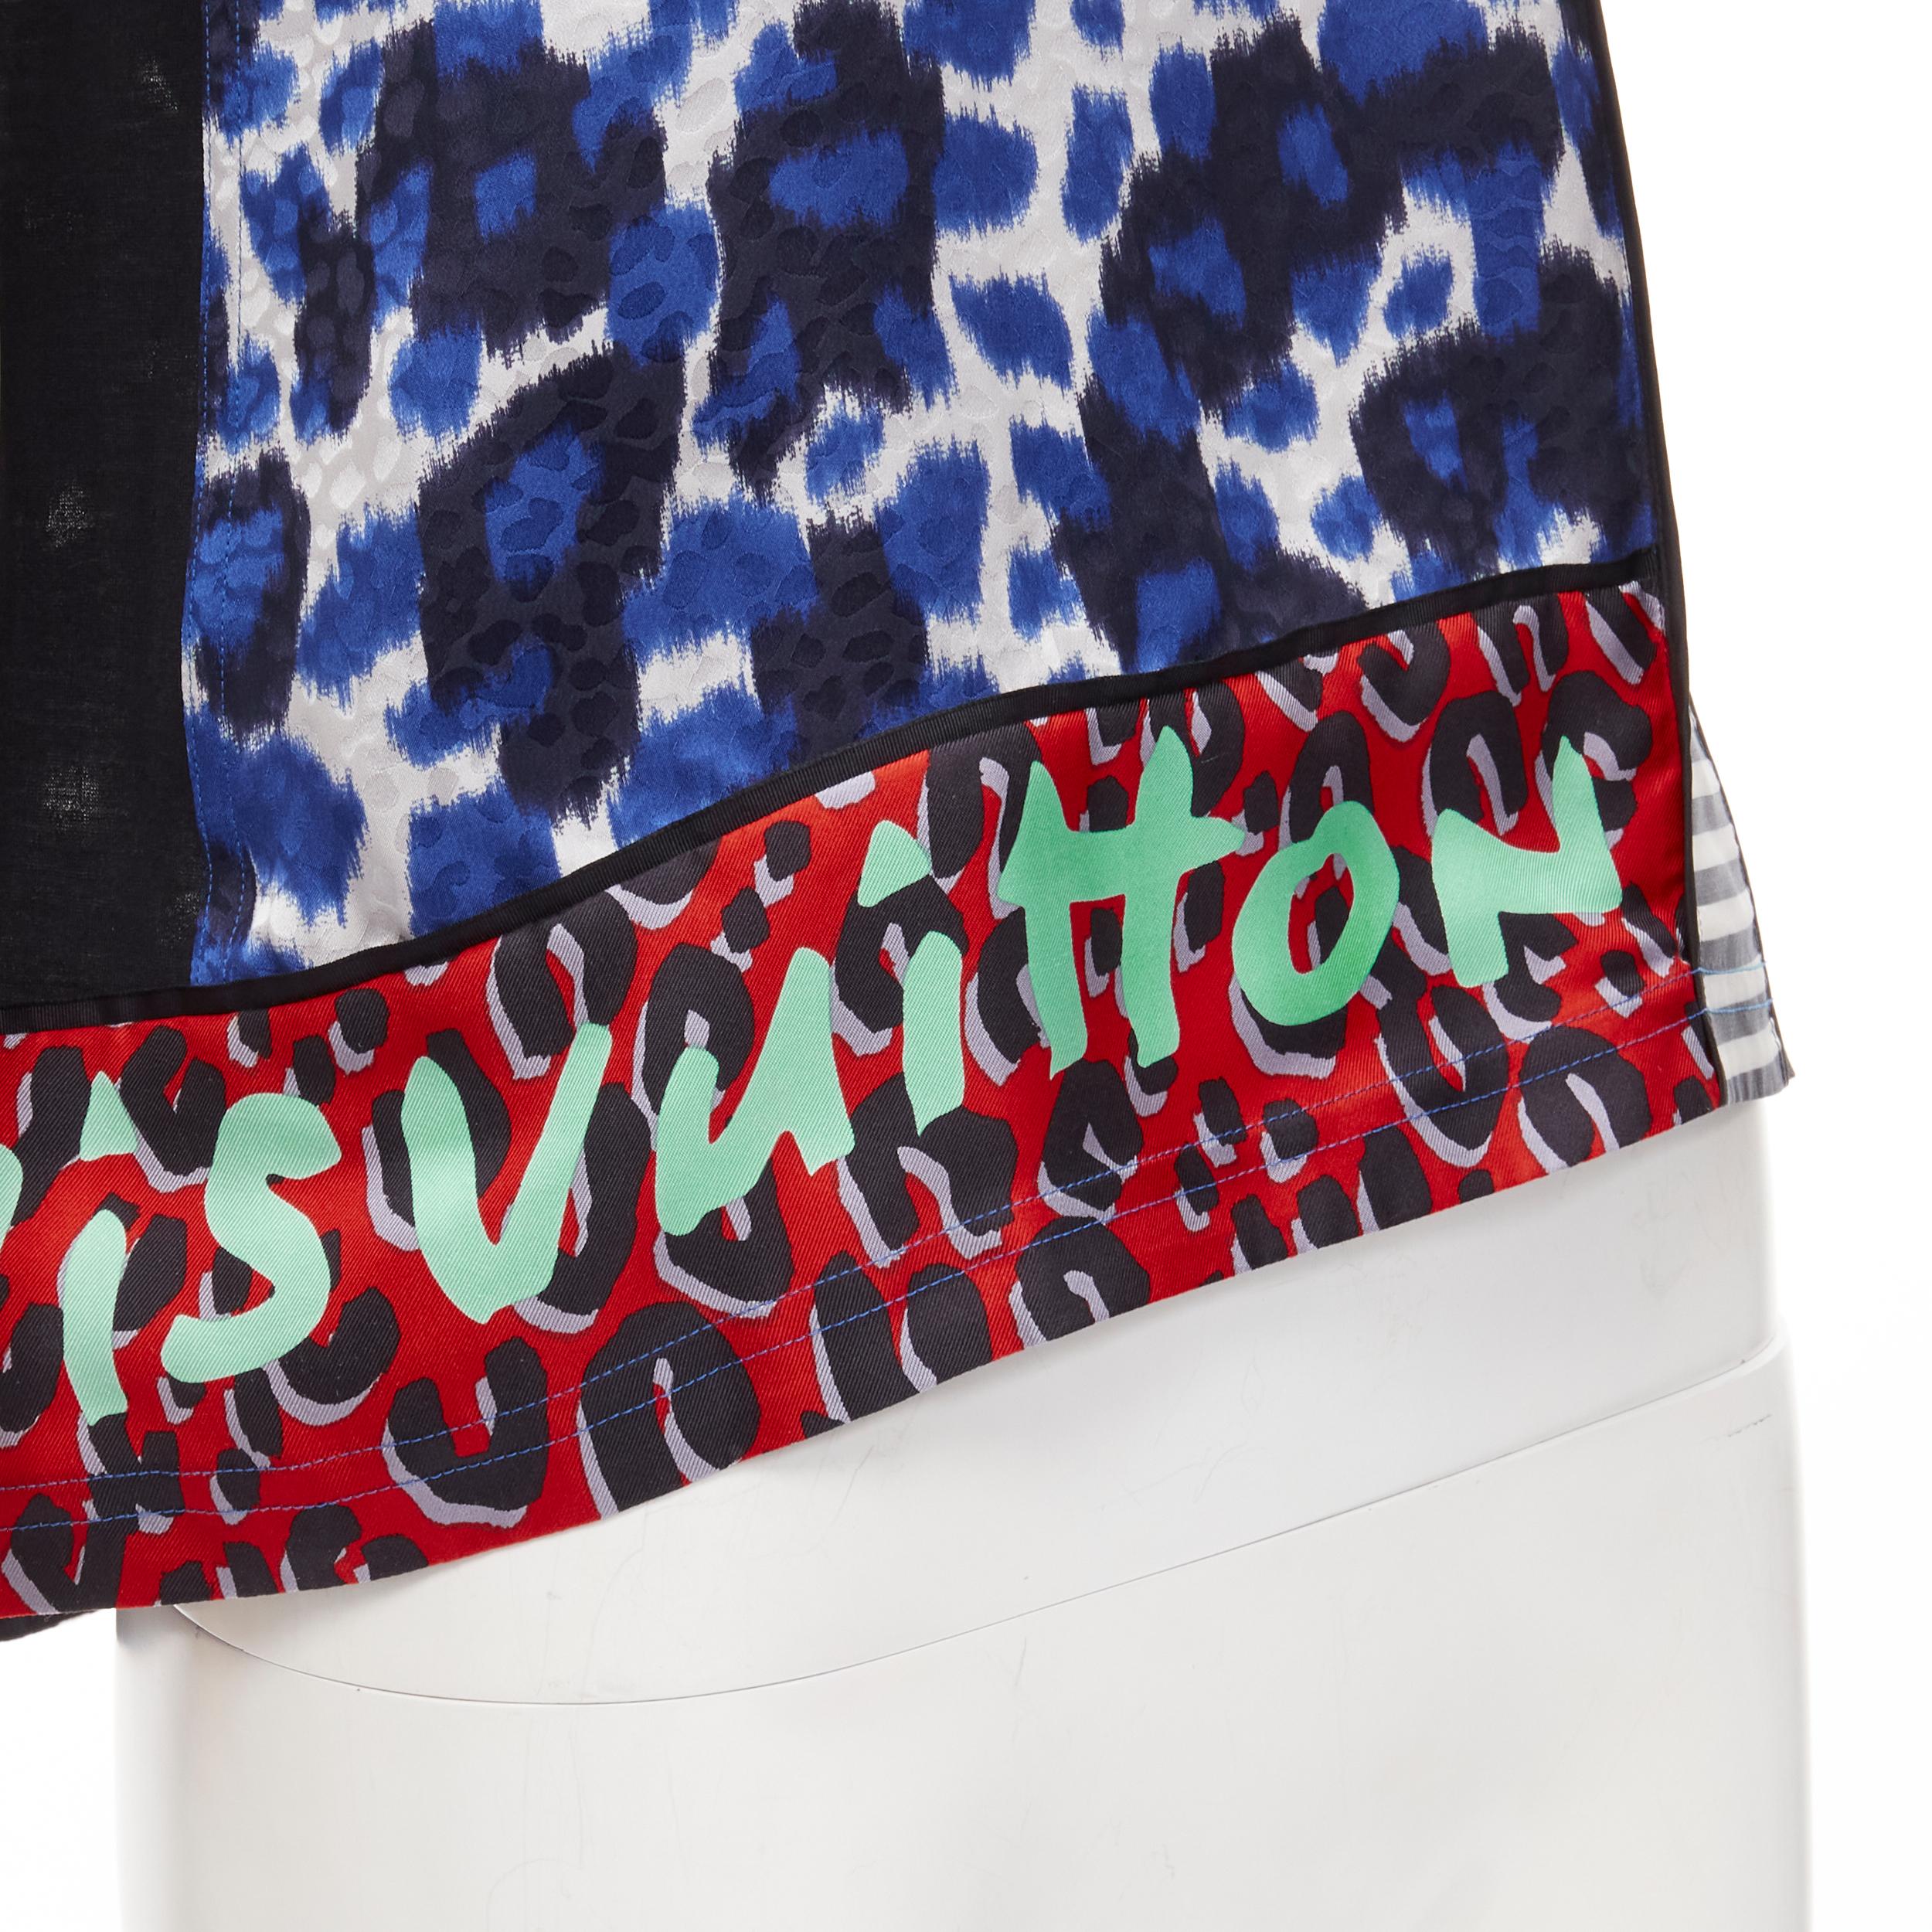 Louis Vuitton Graffiti T Shirt - 4 For Sale on 1stDibs